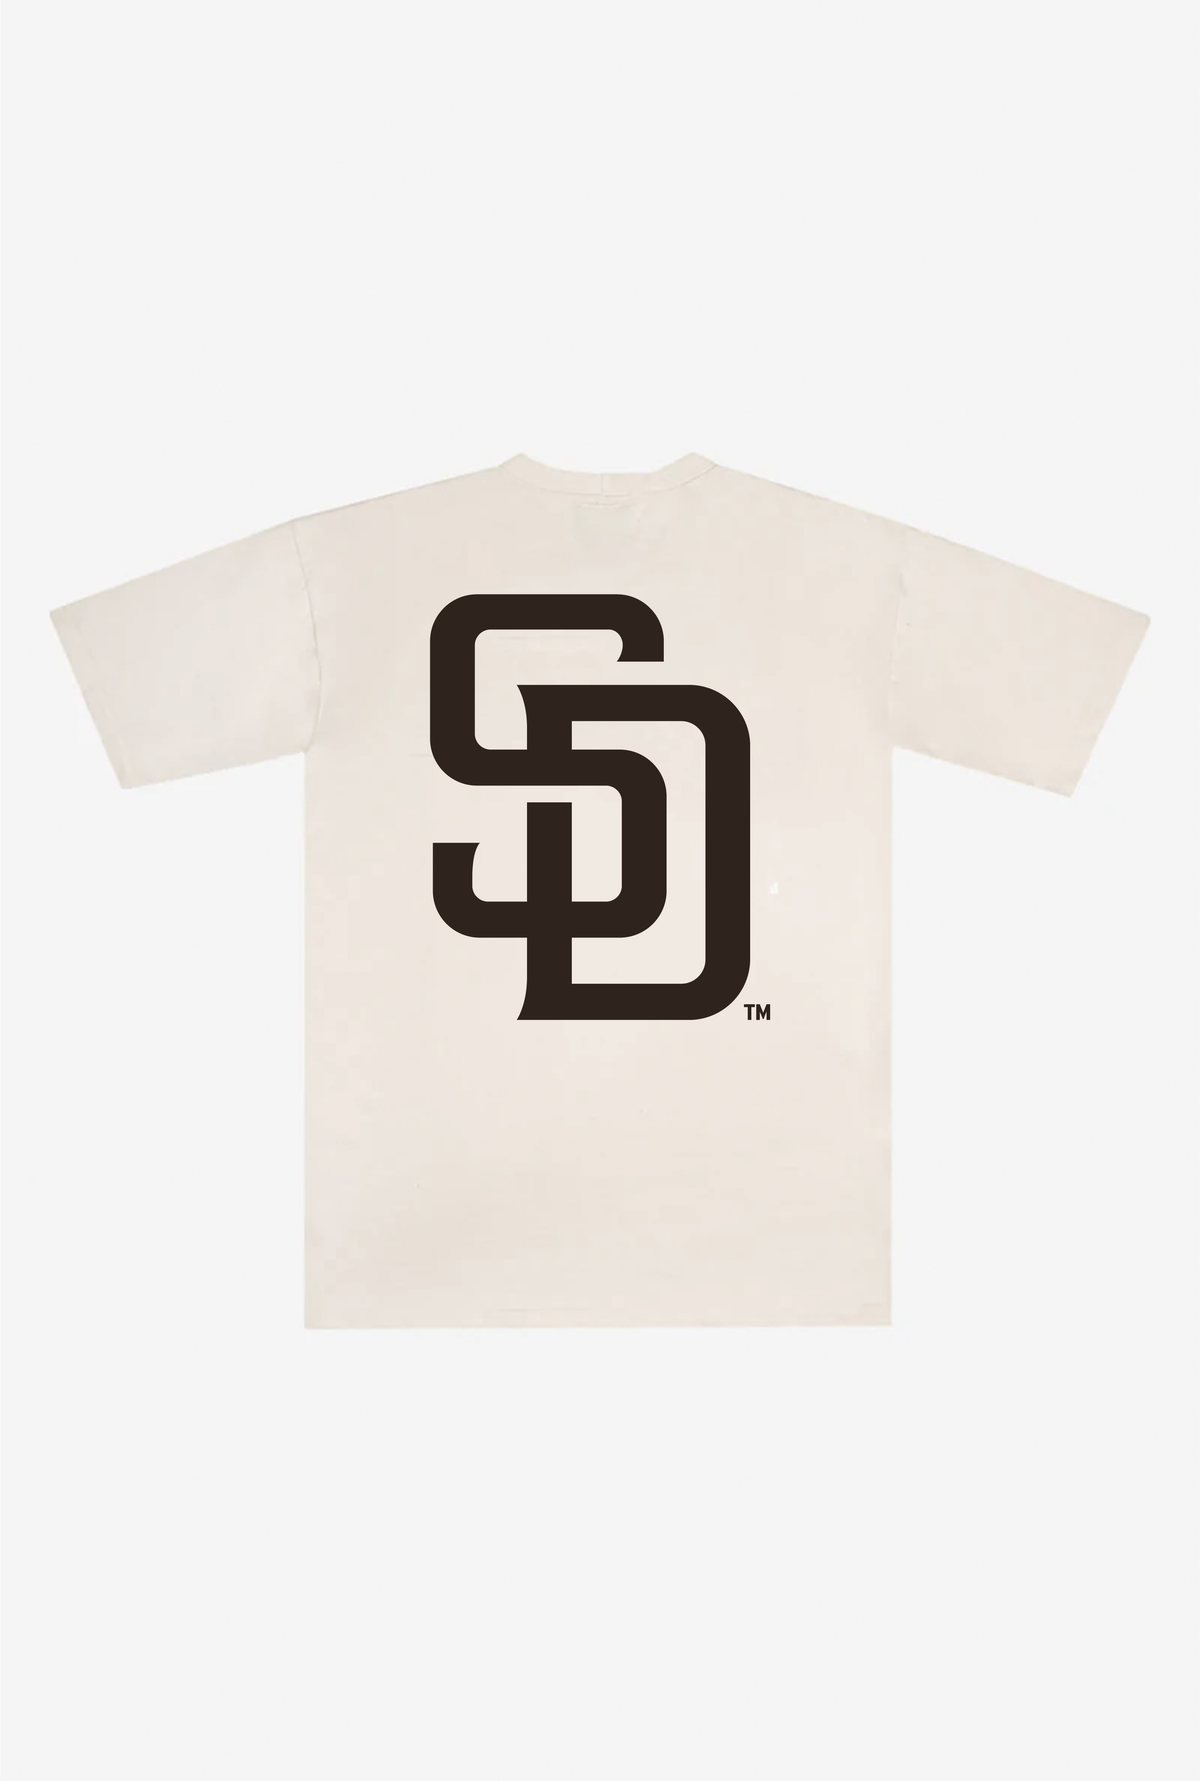 San Diego Padres Heavyweight T-Shirt - Natural